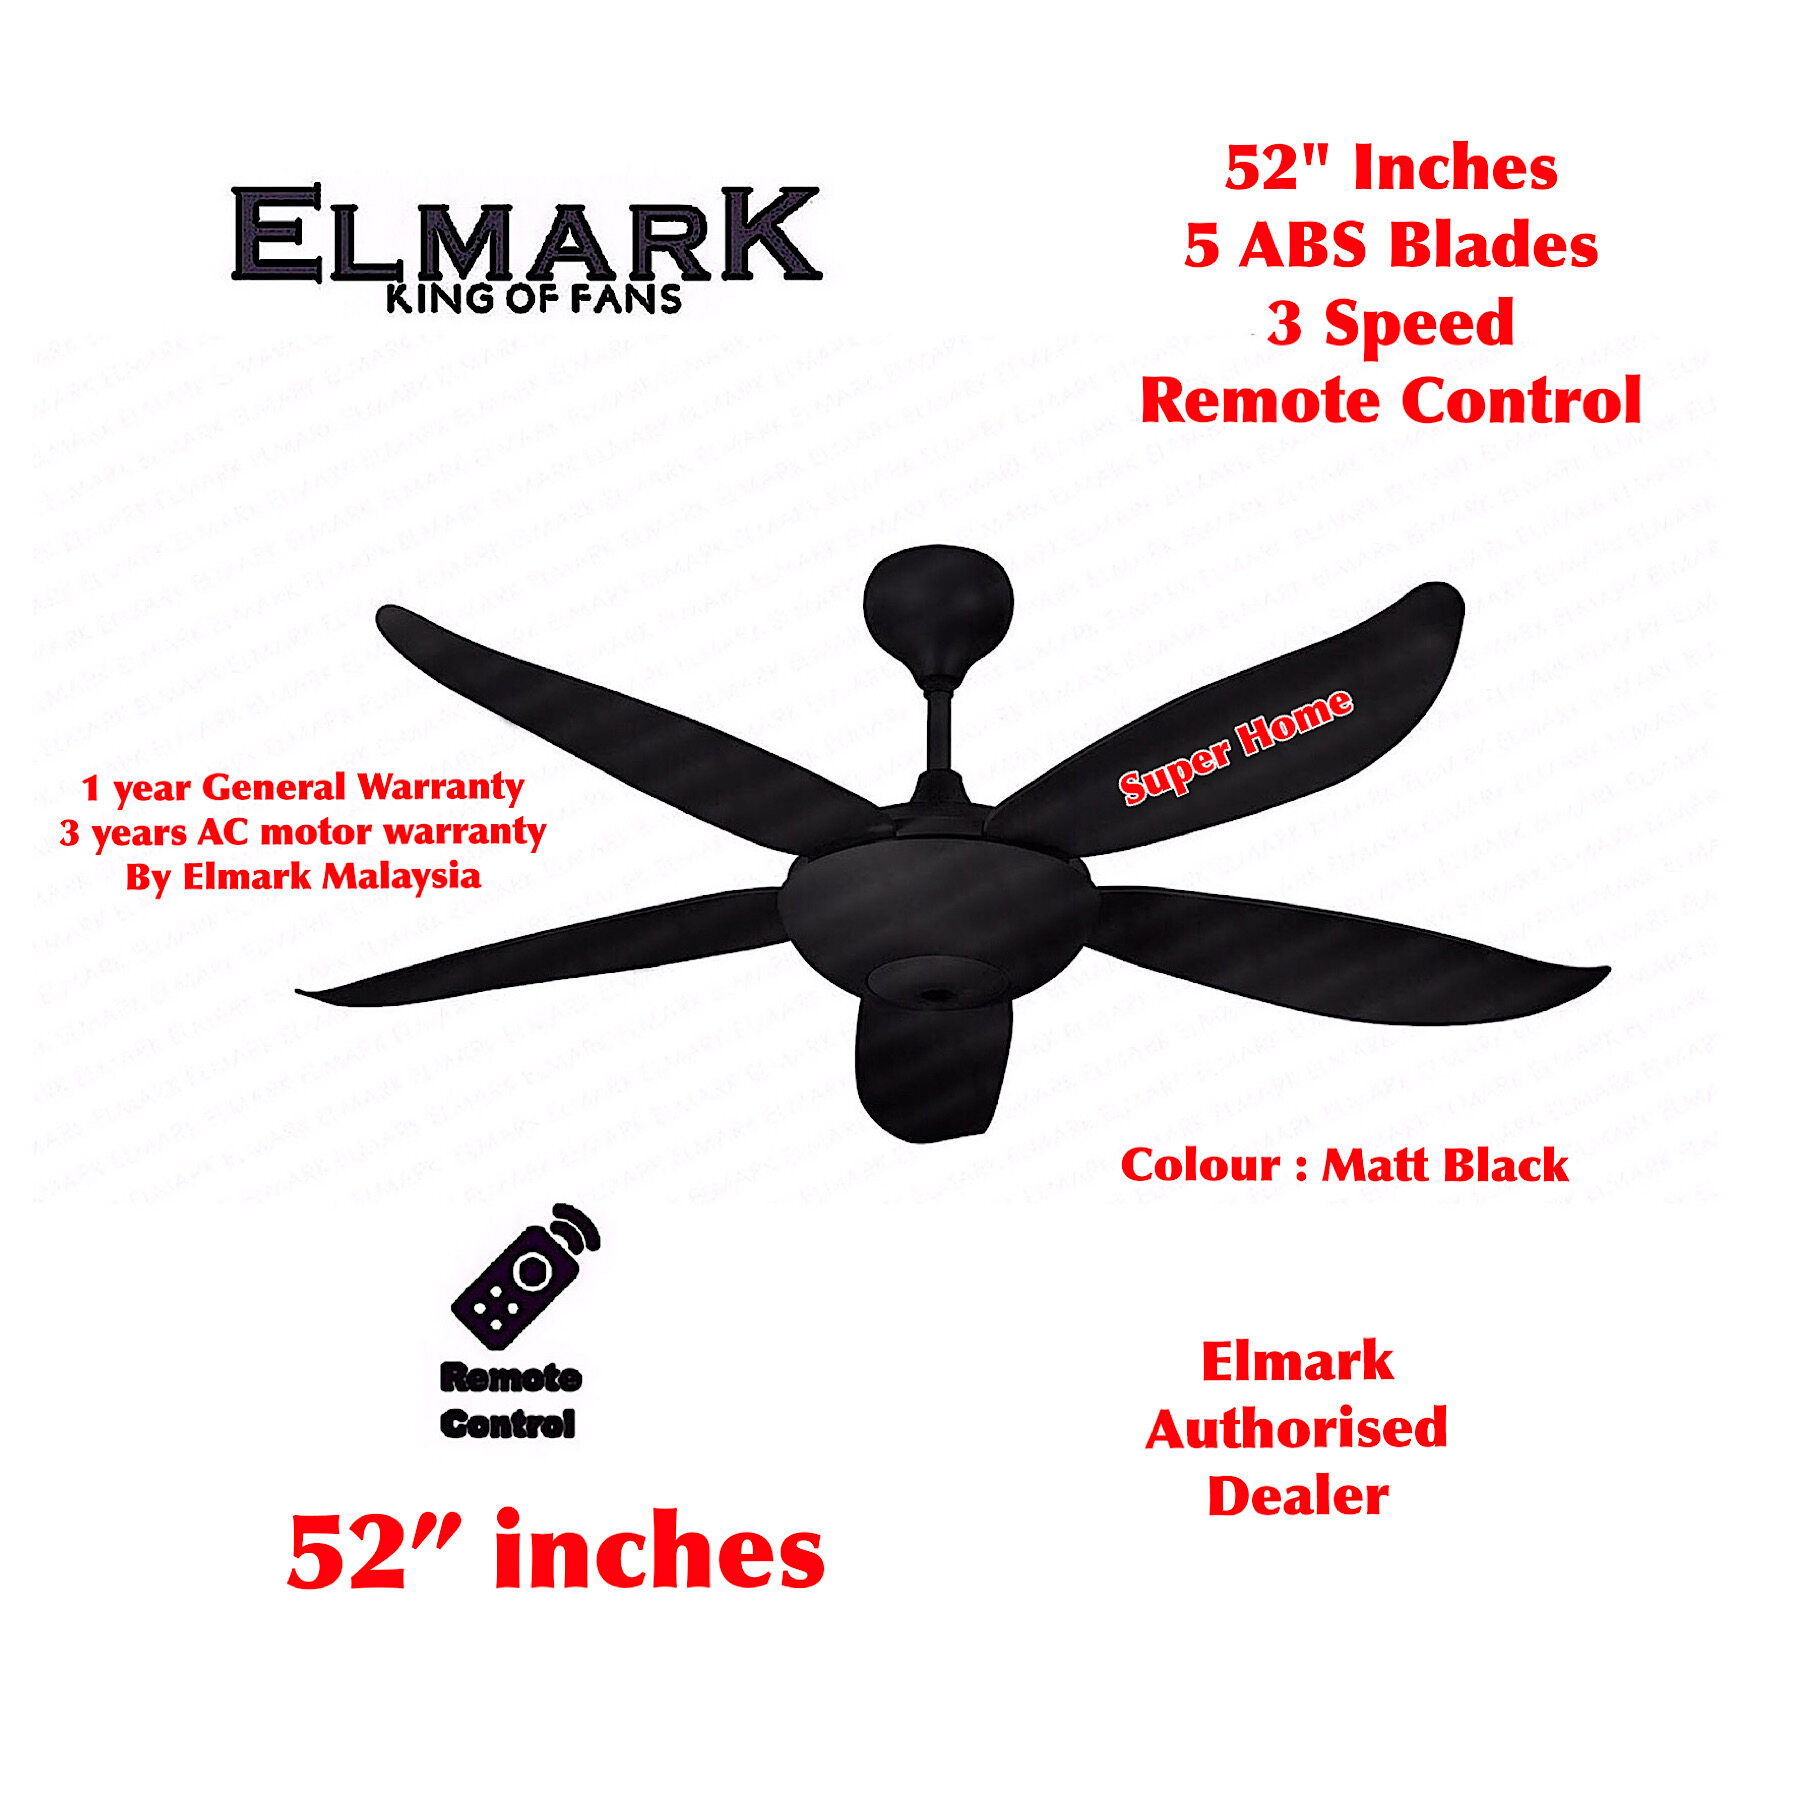 [Limited Stock] Elmark KL101 ABS Blade AC Motor 52 inch Ceiling Fan with Remote Control (5 blades) - Matt Black